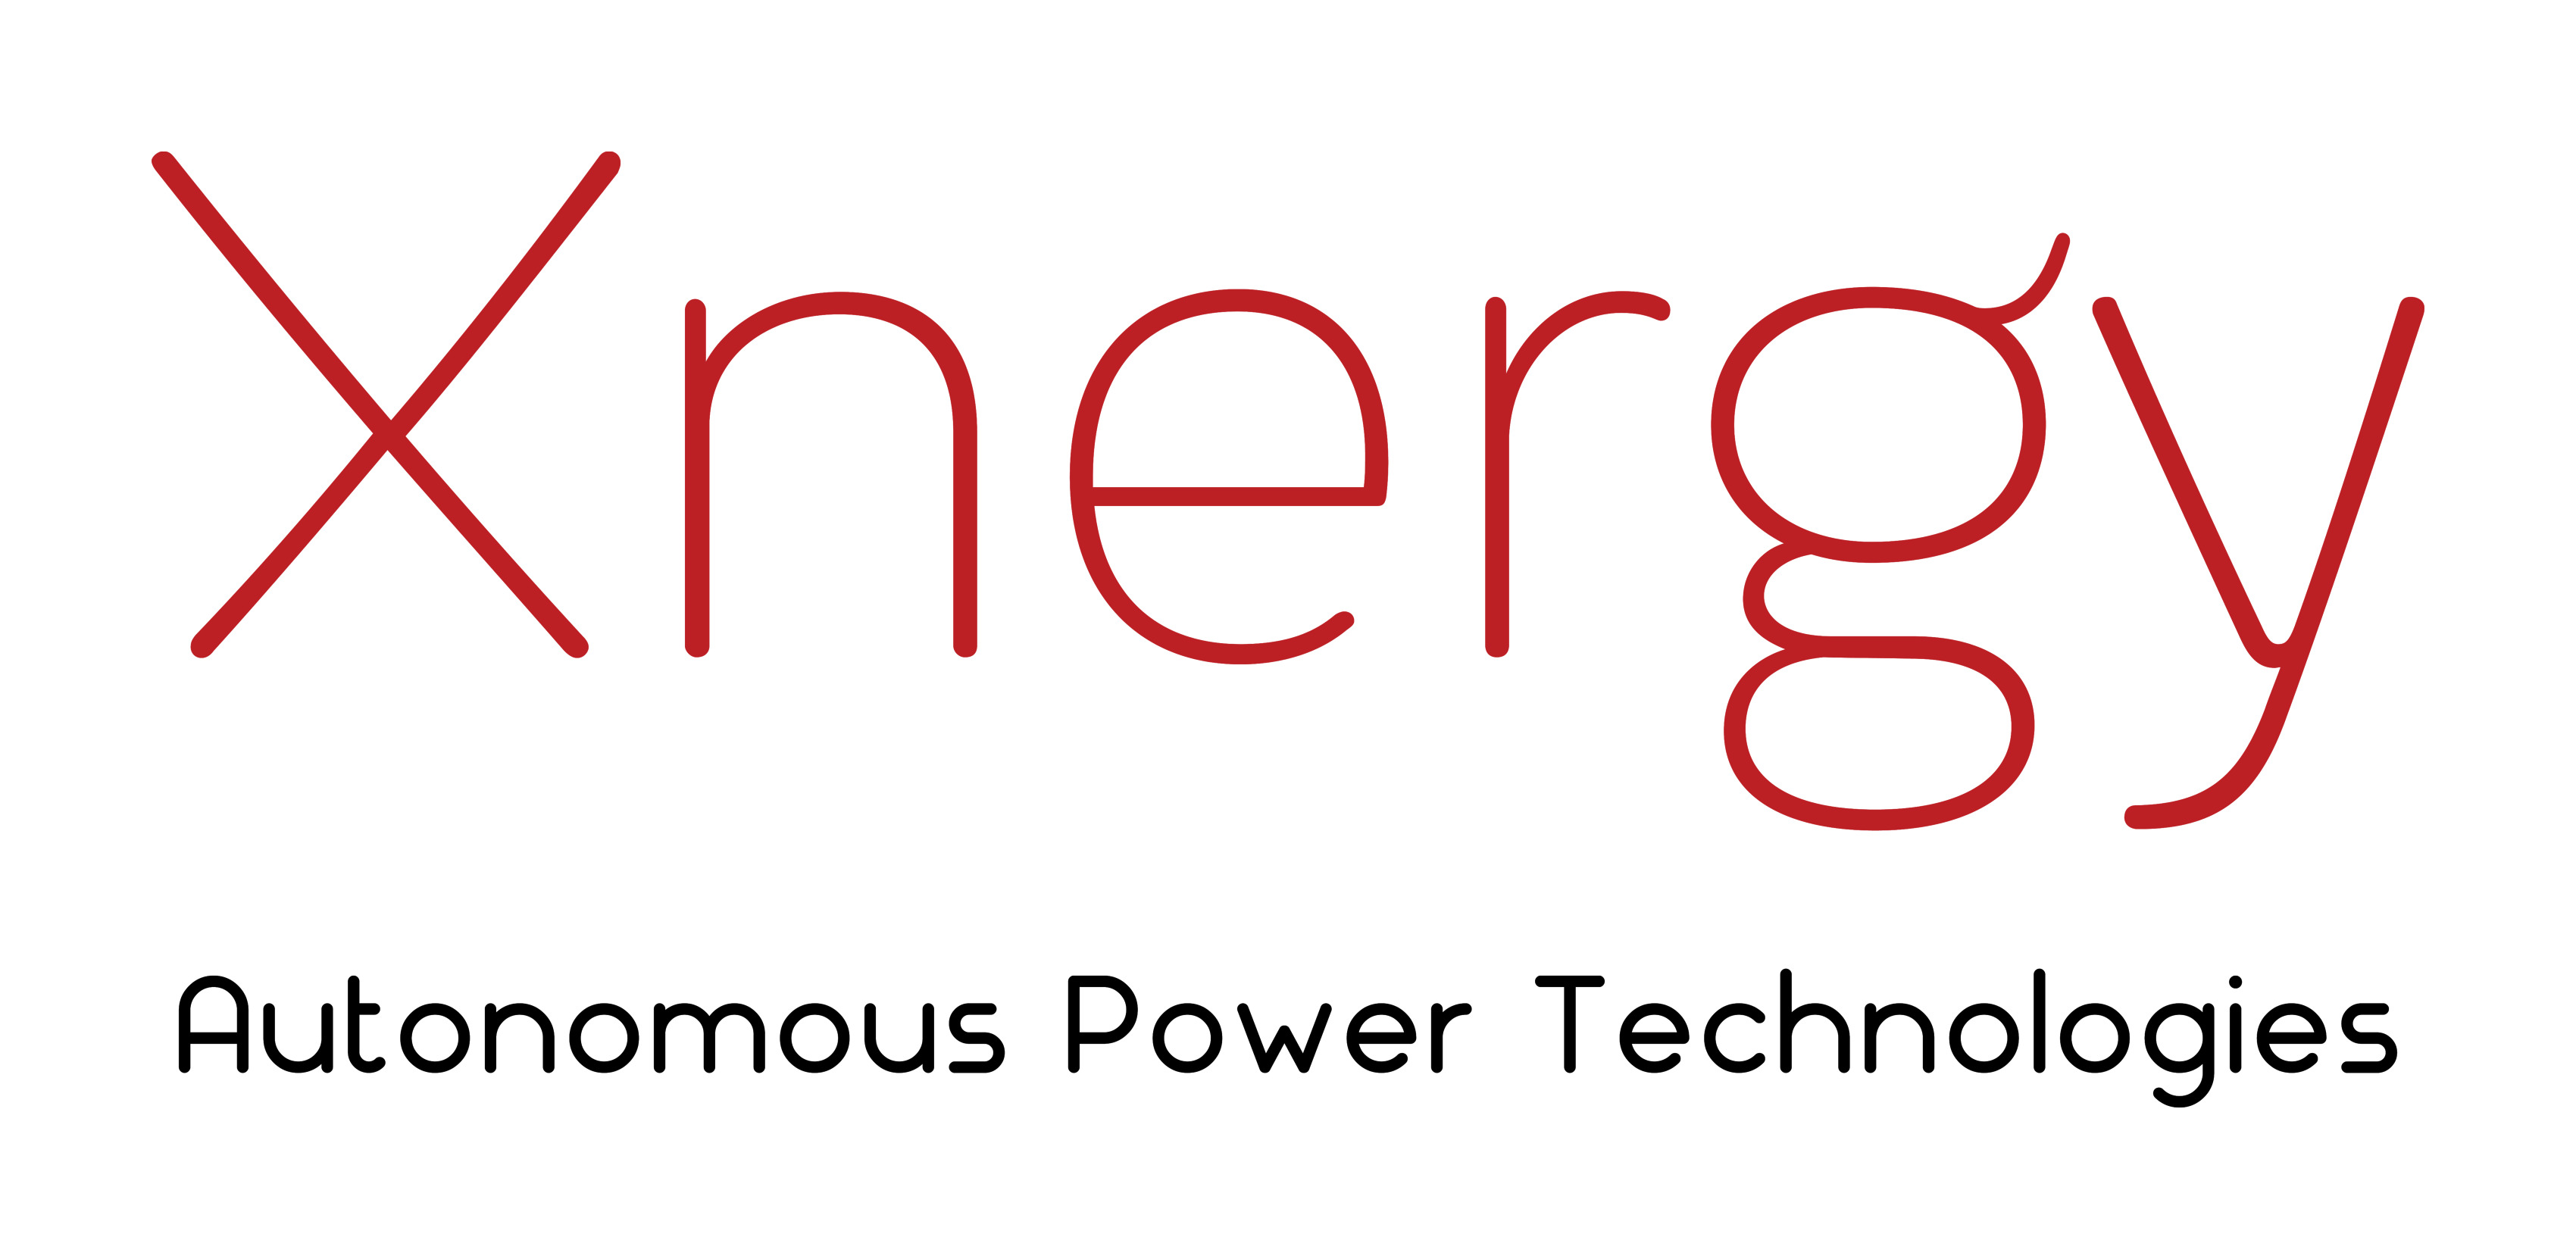 Xnergy Autonomous Power Technologies